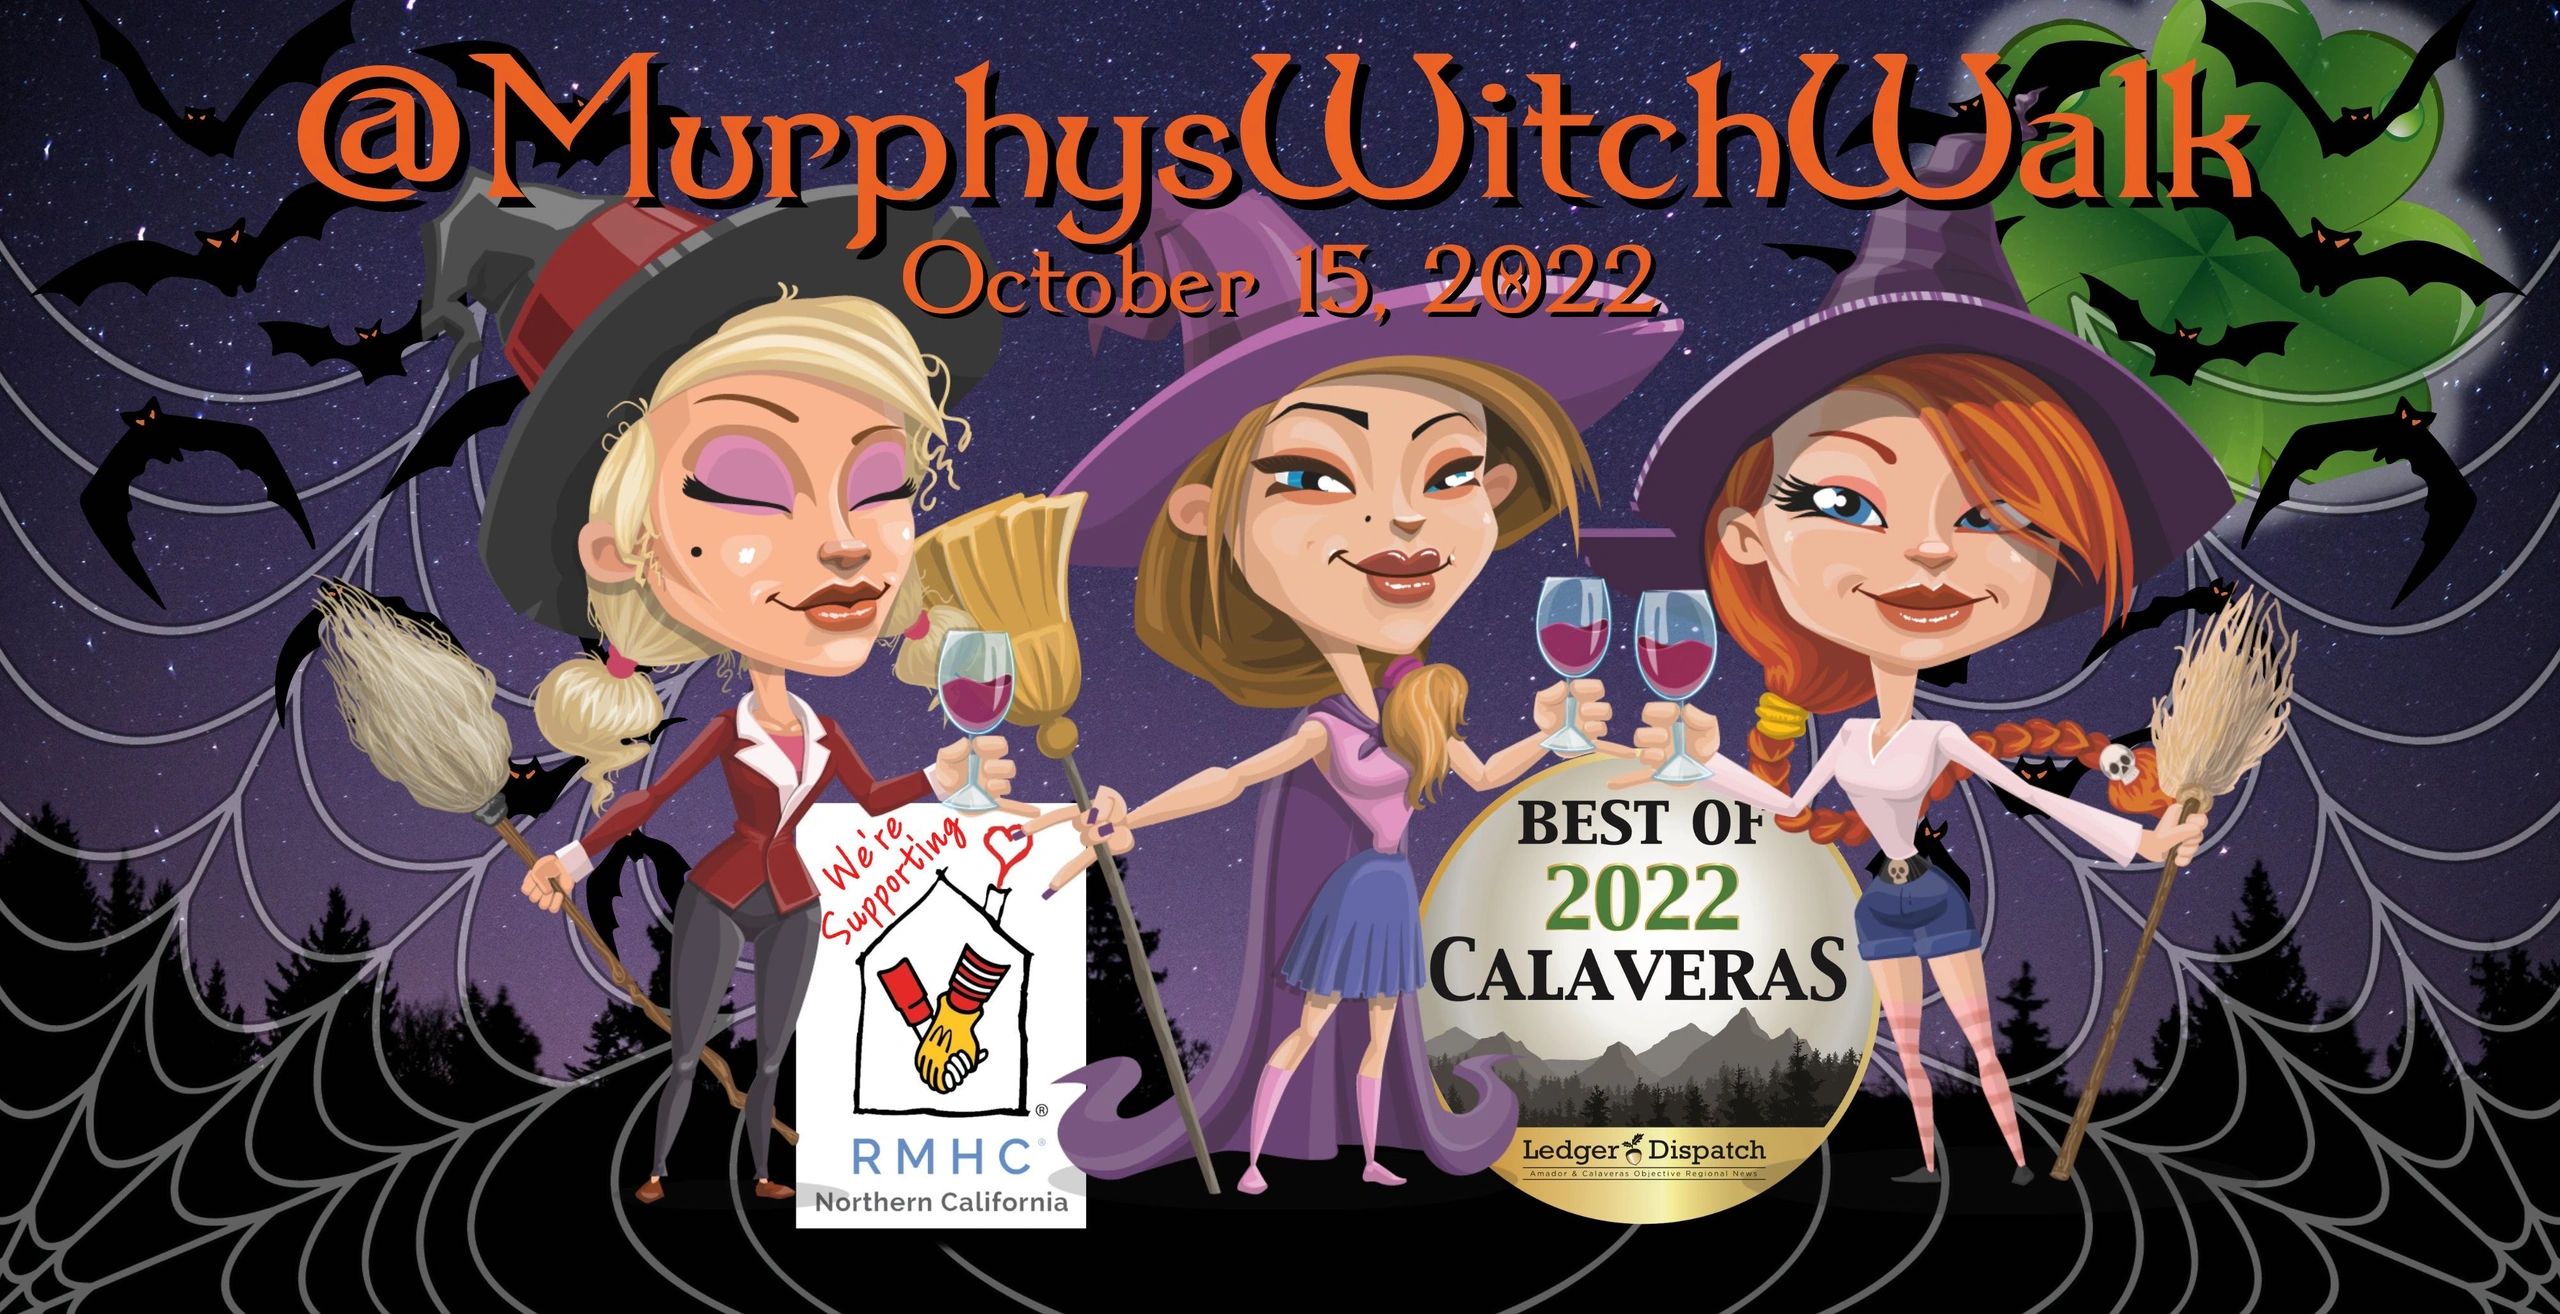 Murphys Witch Walk, Ronald McDonald House Charities, Best Annual Calaveras County Event of 2022. 